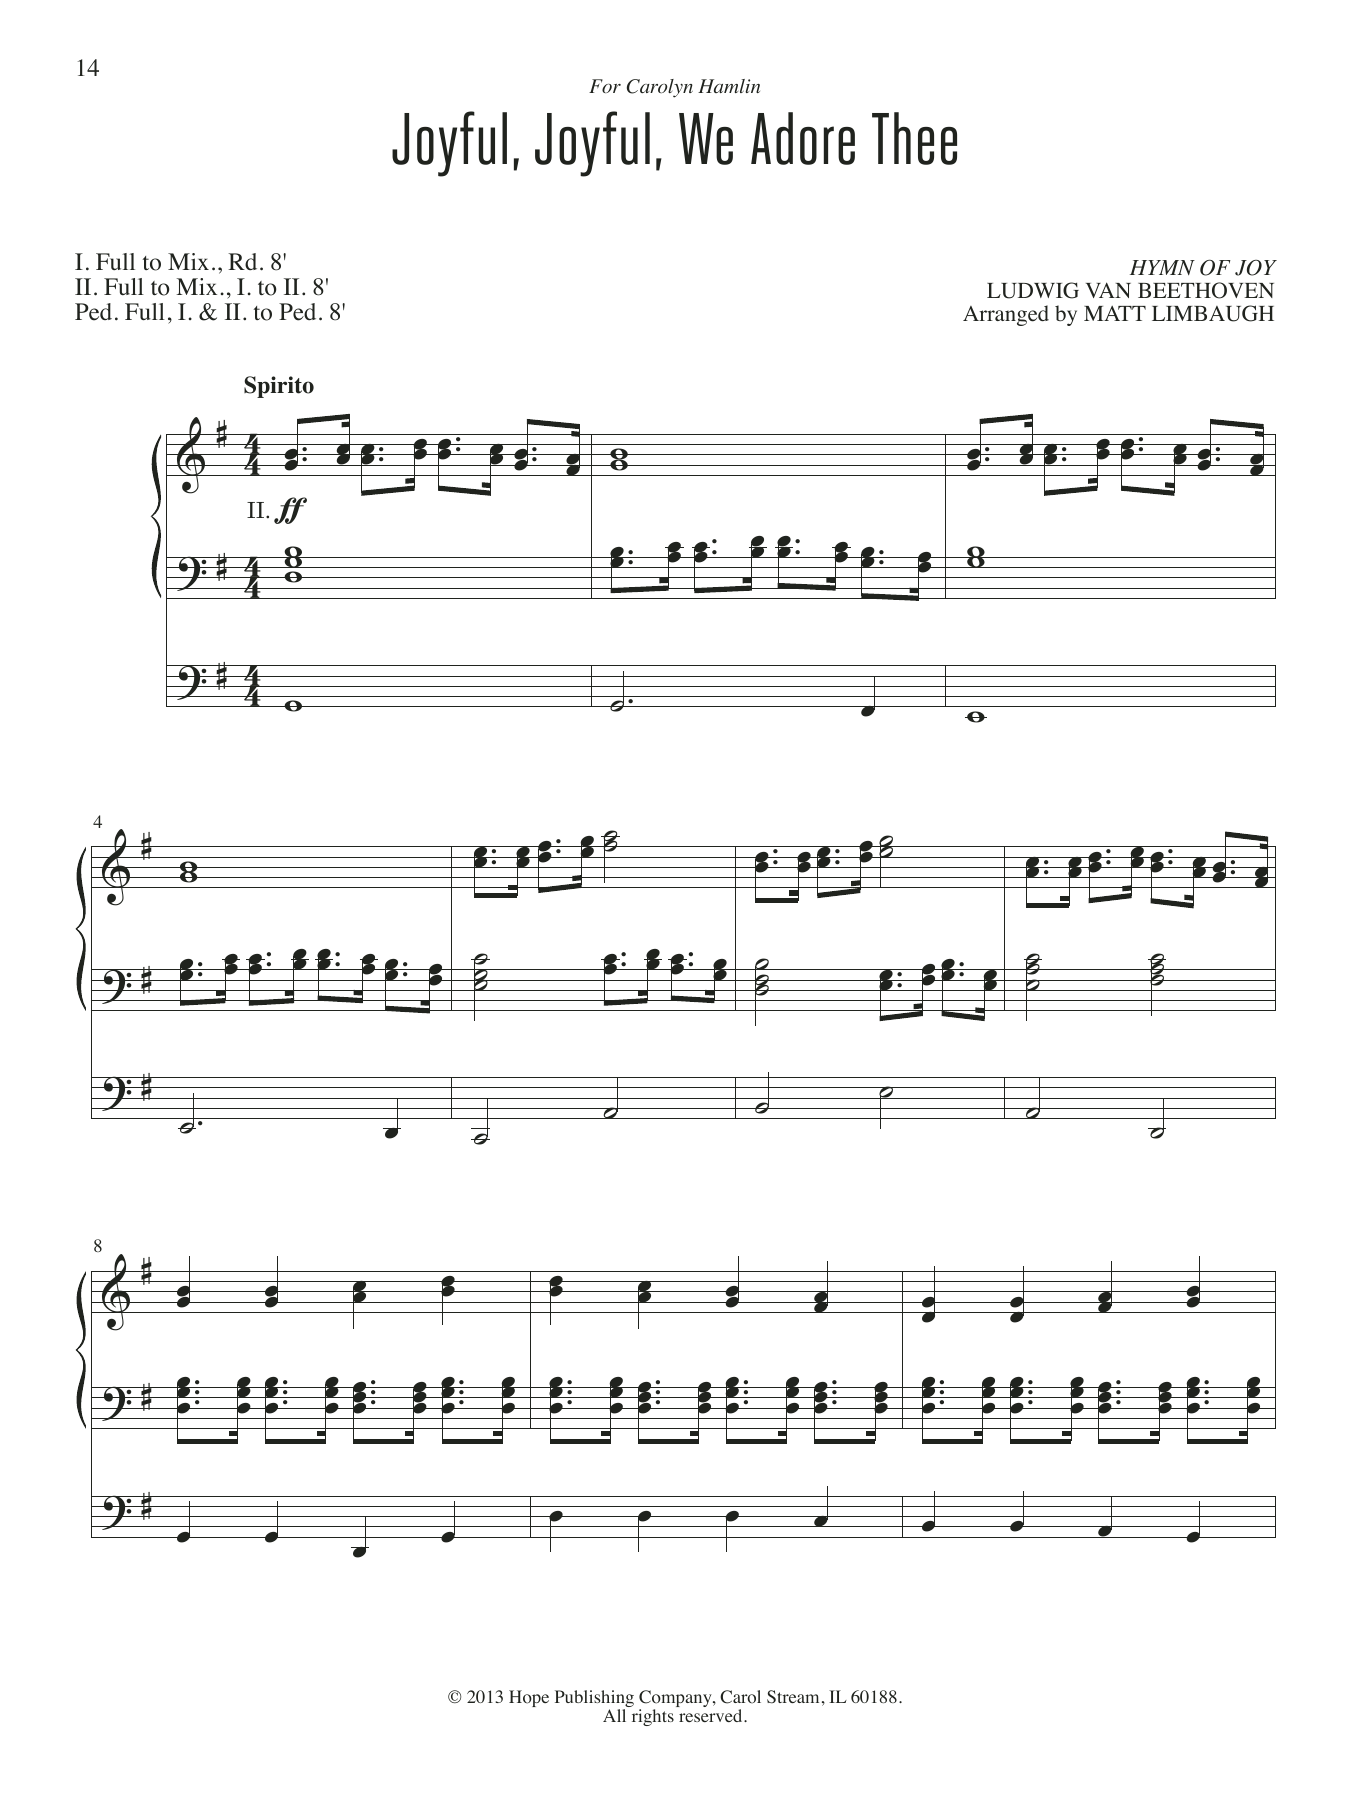 Matt Limbaugh Joyful, Joyful, We Adore Thee Sheet Music Notes & Chords for Organ - Download or Print PDF